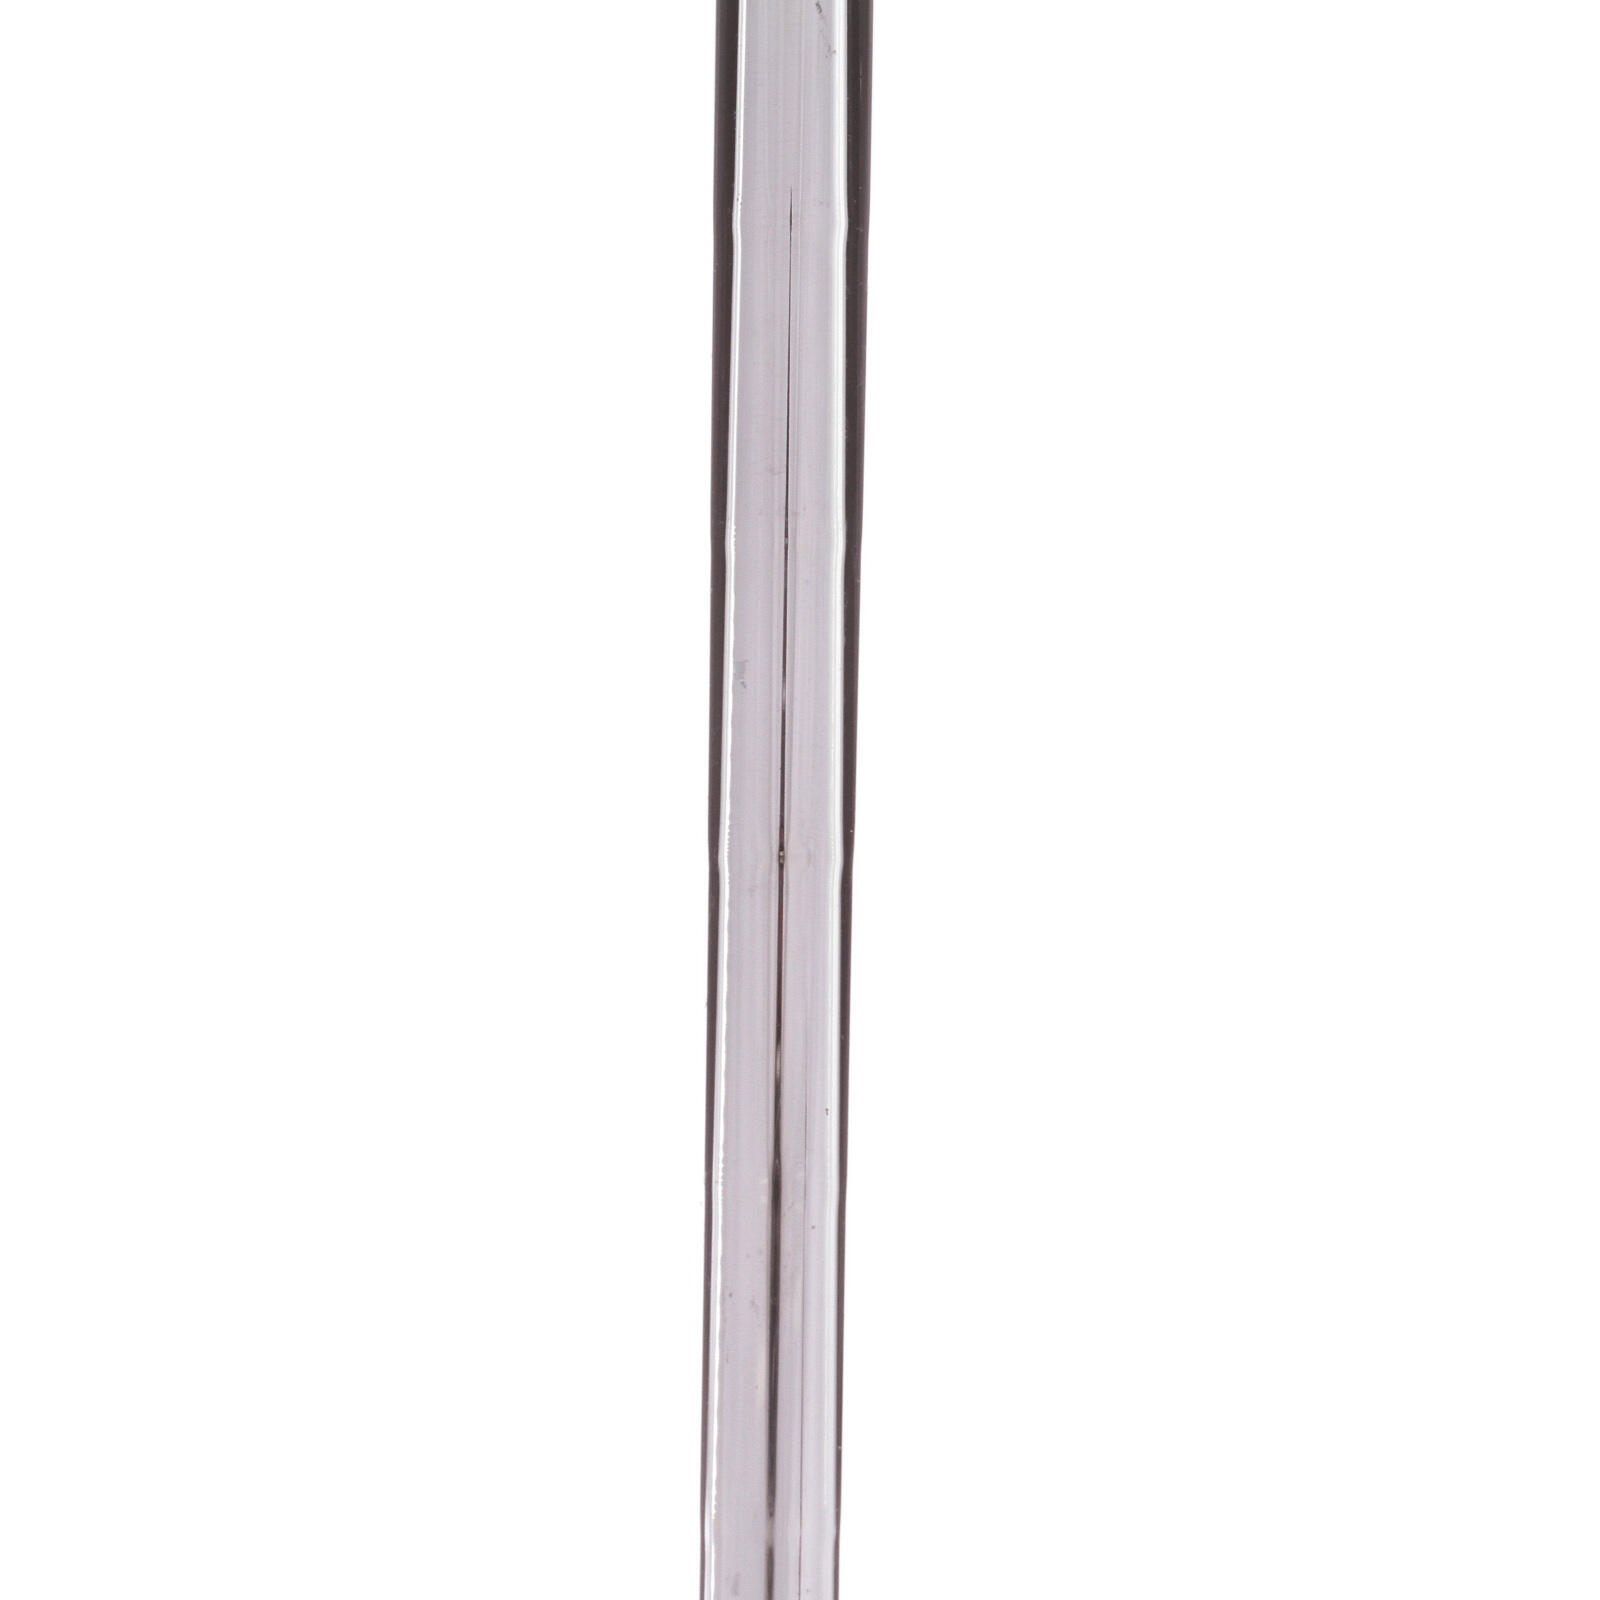 USED - 6-Iron Ping G5 Steel Shaft Stiff Flex Right Handed - GRADE B 4/5